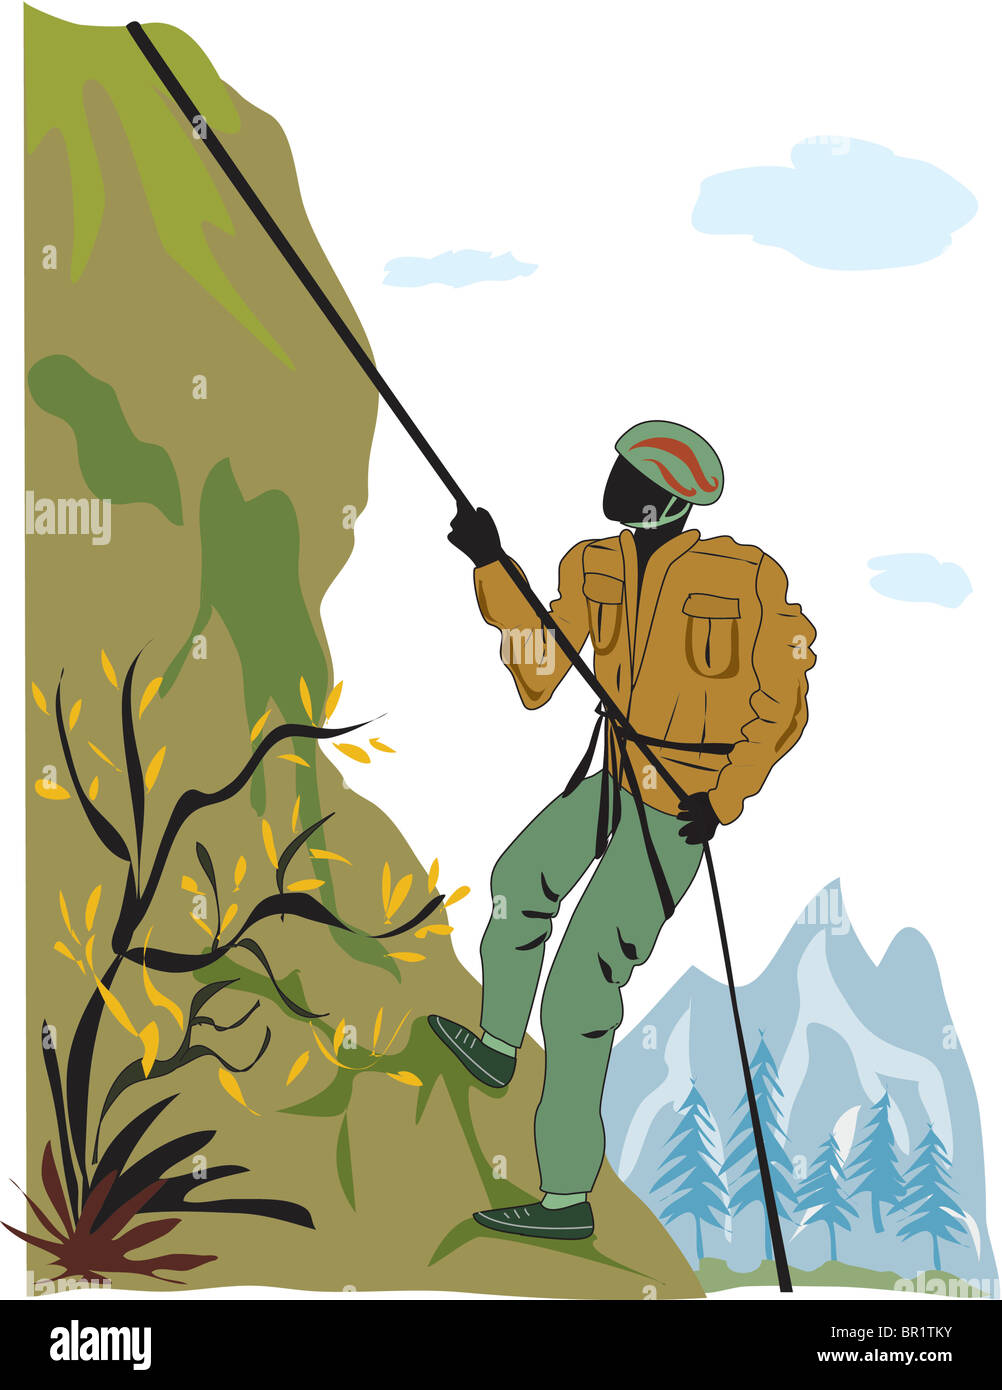 Mountaineer Line Art Sketch Illustration Stock Illustration 274450307   Shutterstock